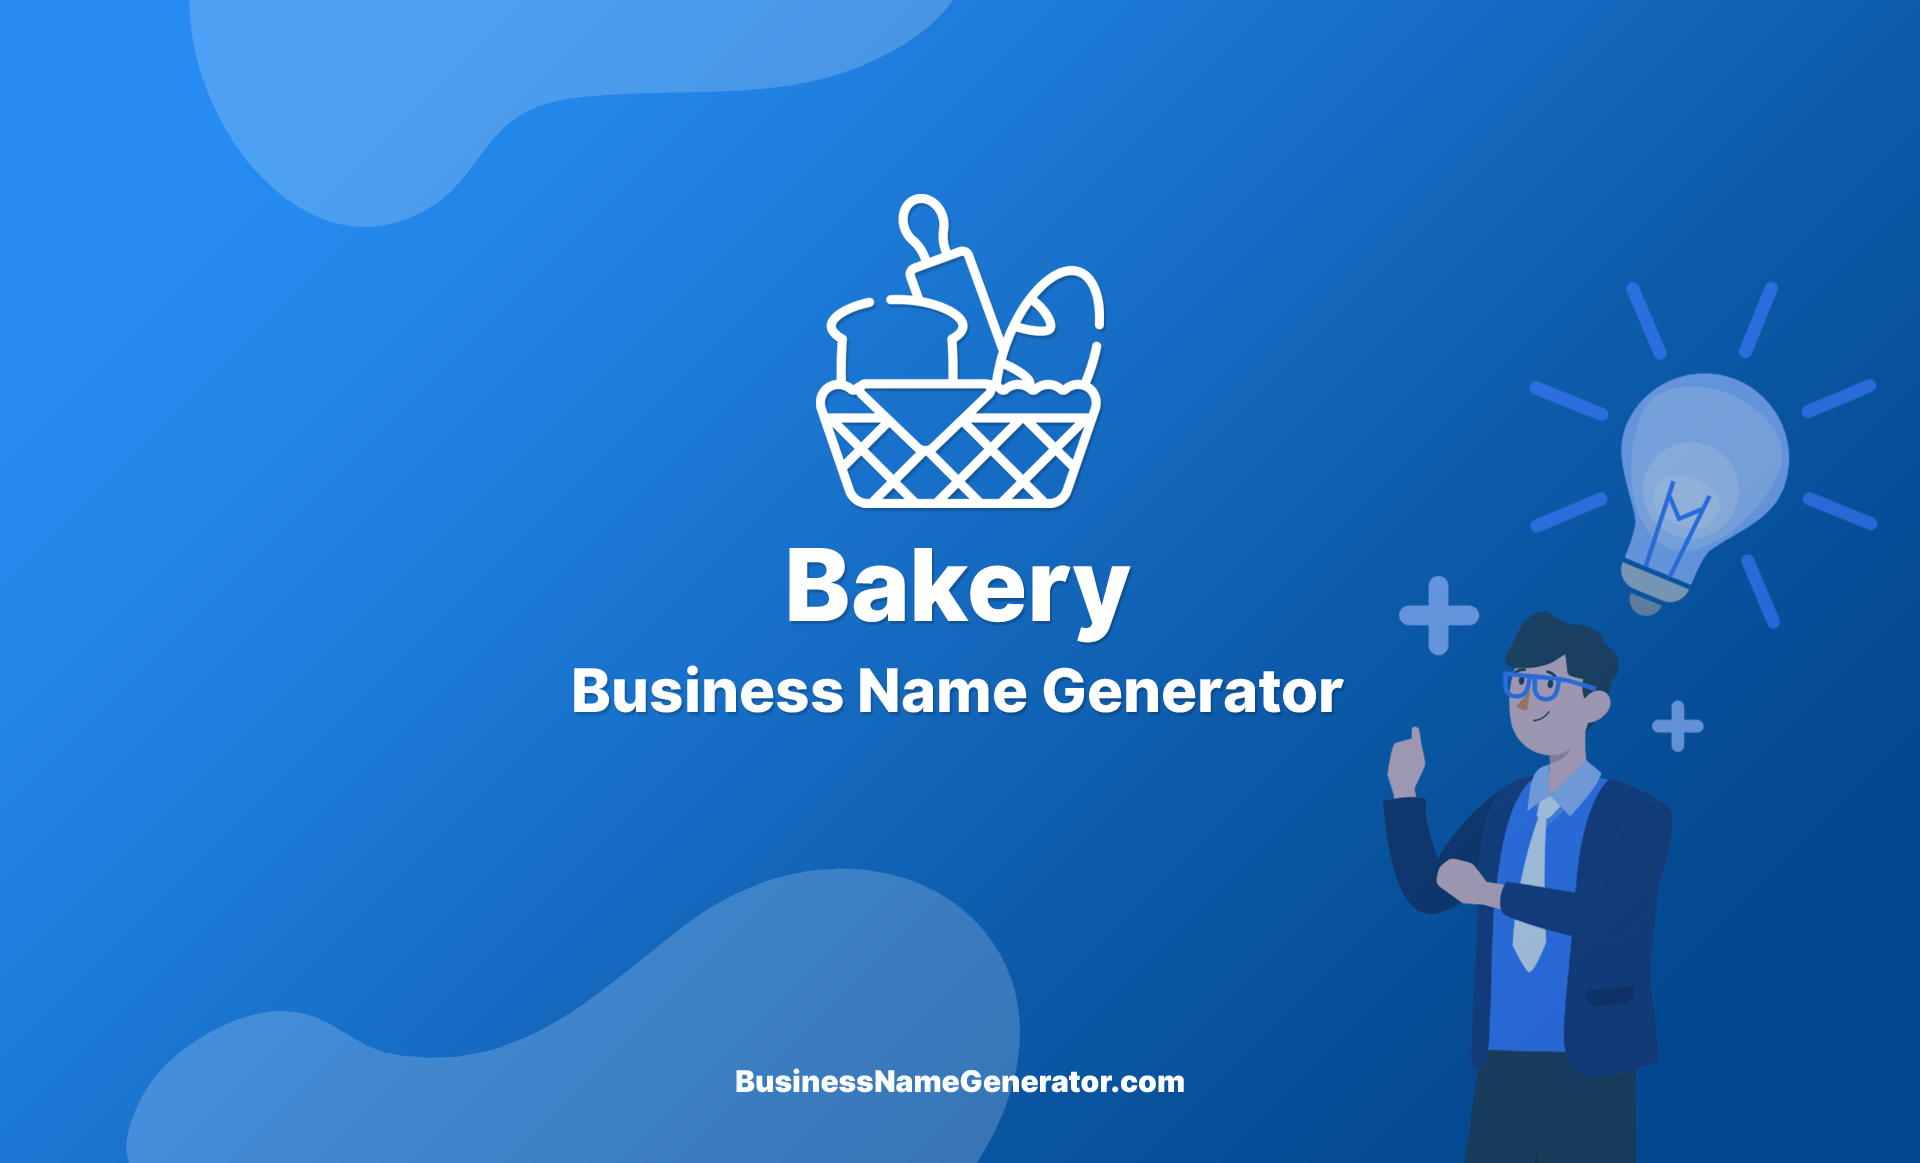 Bakery Business Name Generator